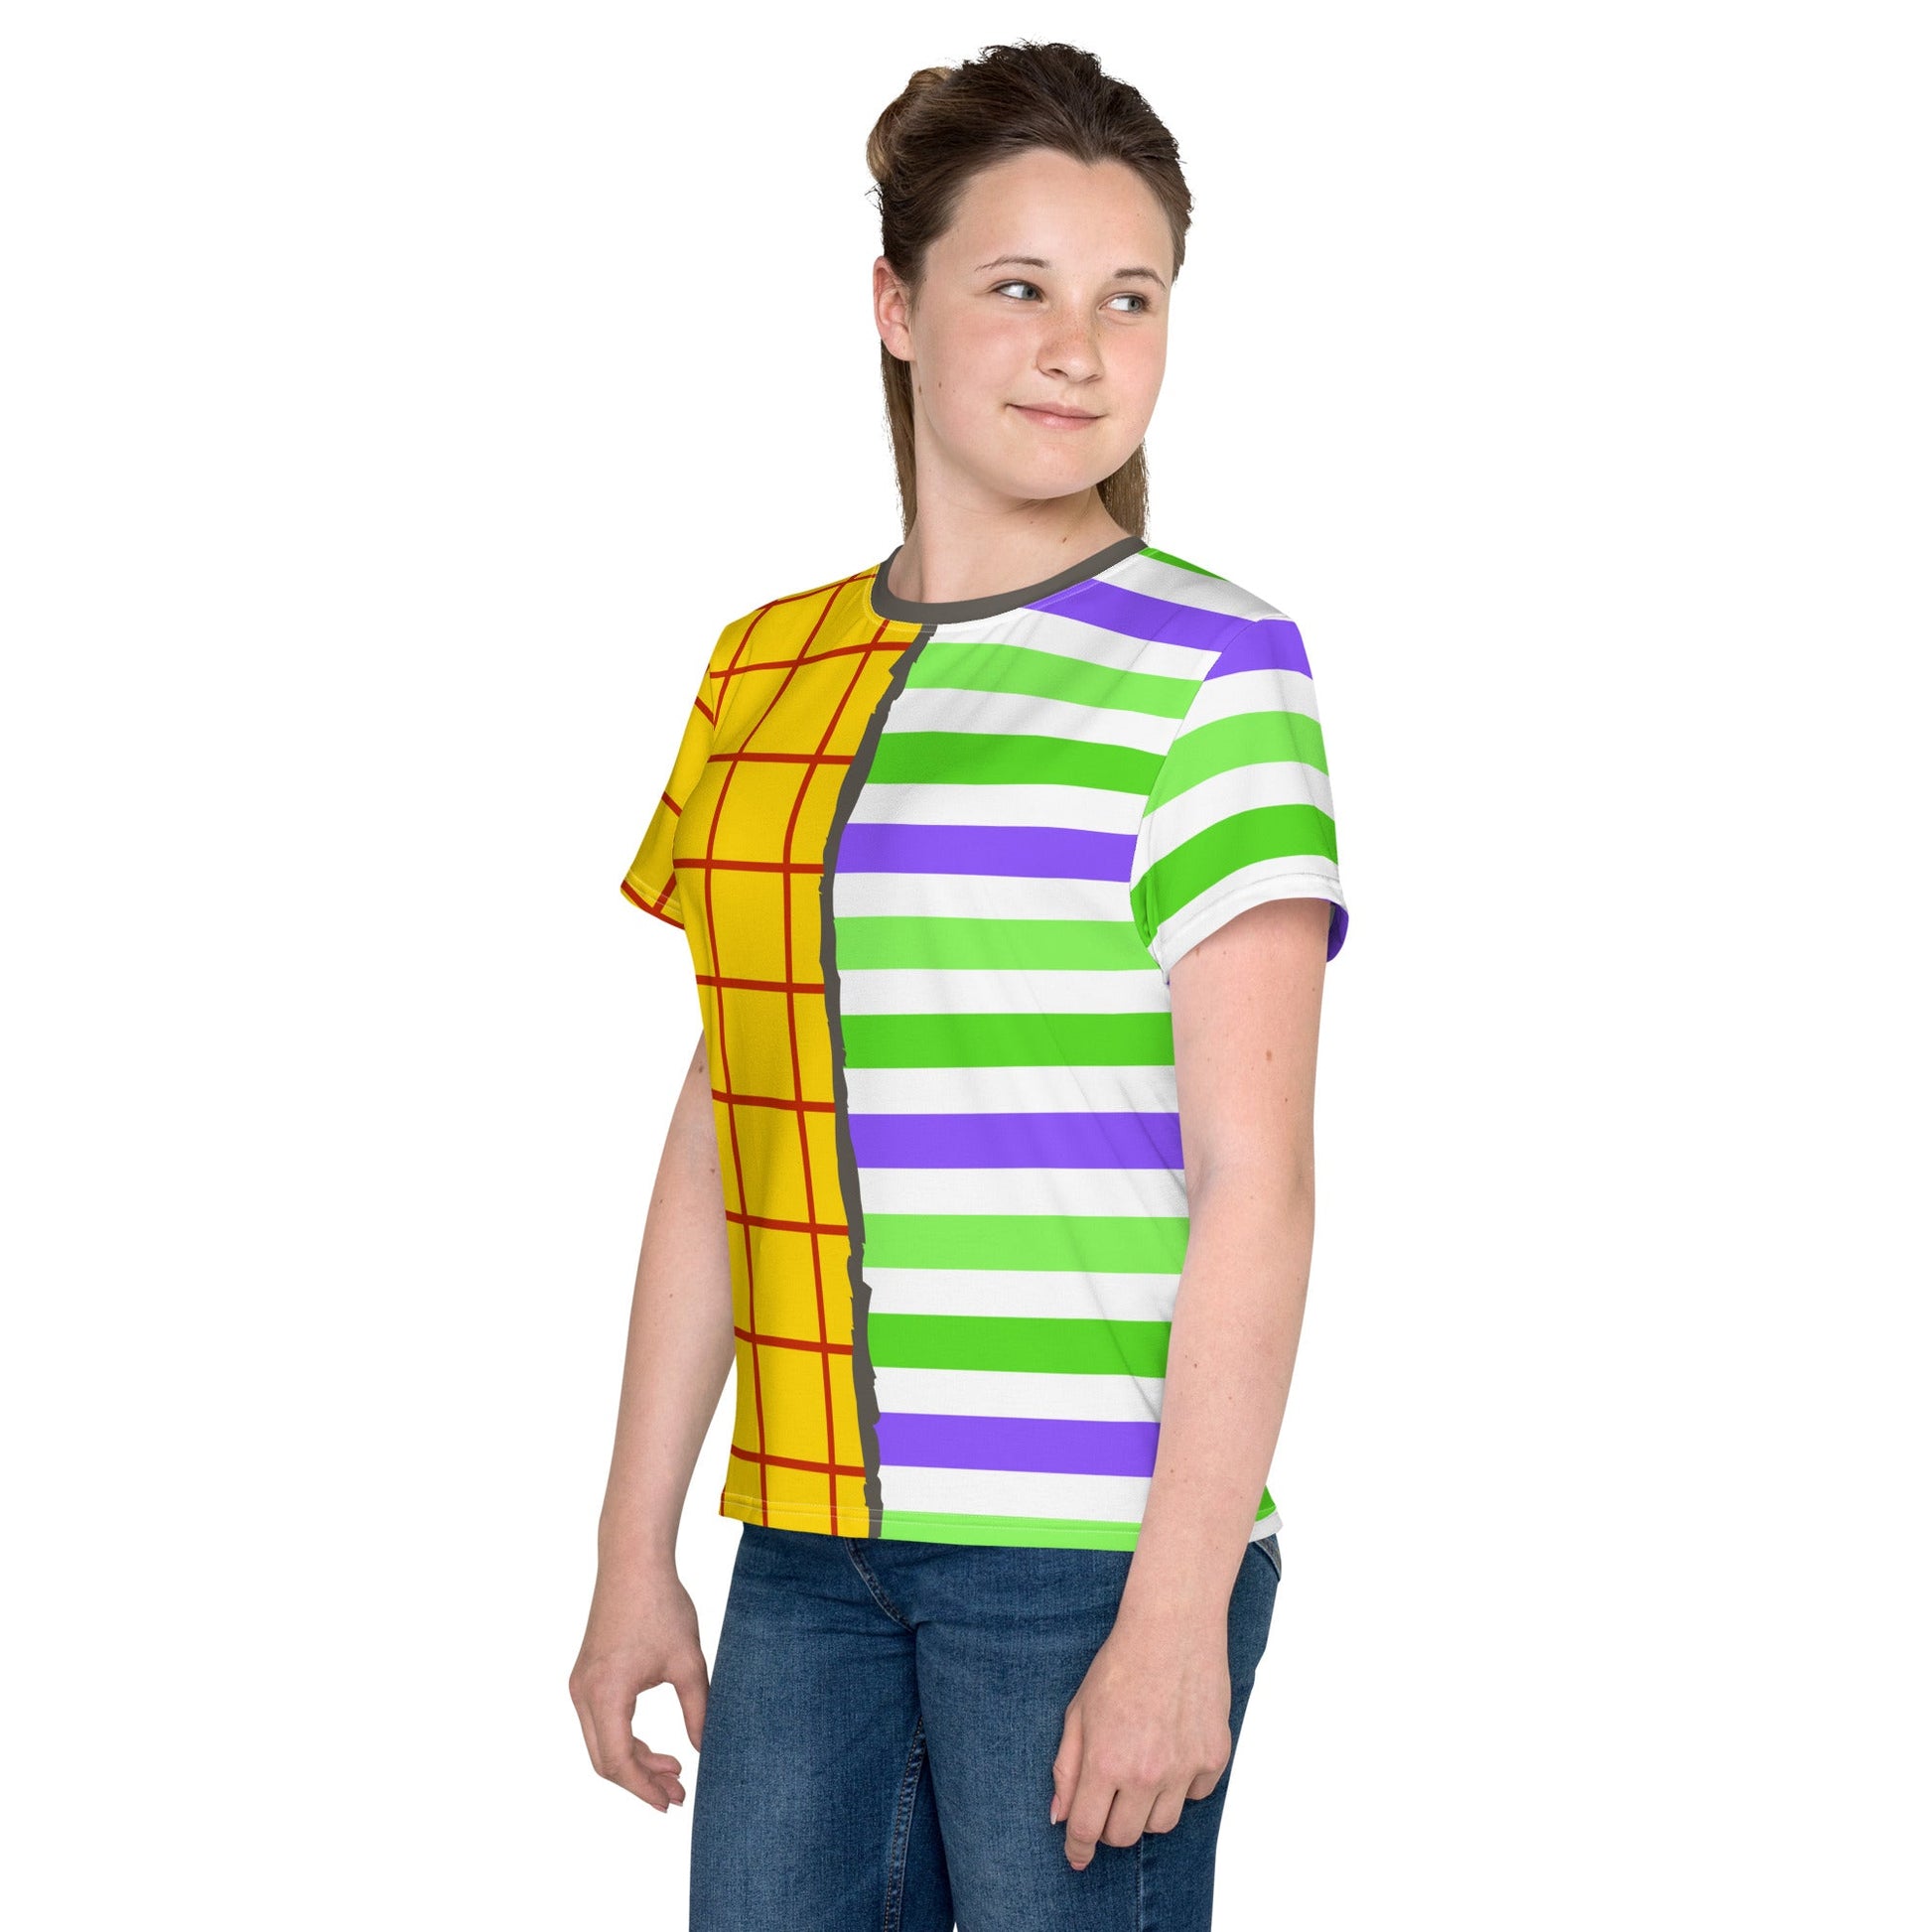 Andy's Room Youth crew neck t-shirt buzz lightyeardisney adultdisney bounding#tag4##tag5##tag6#